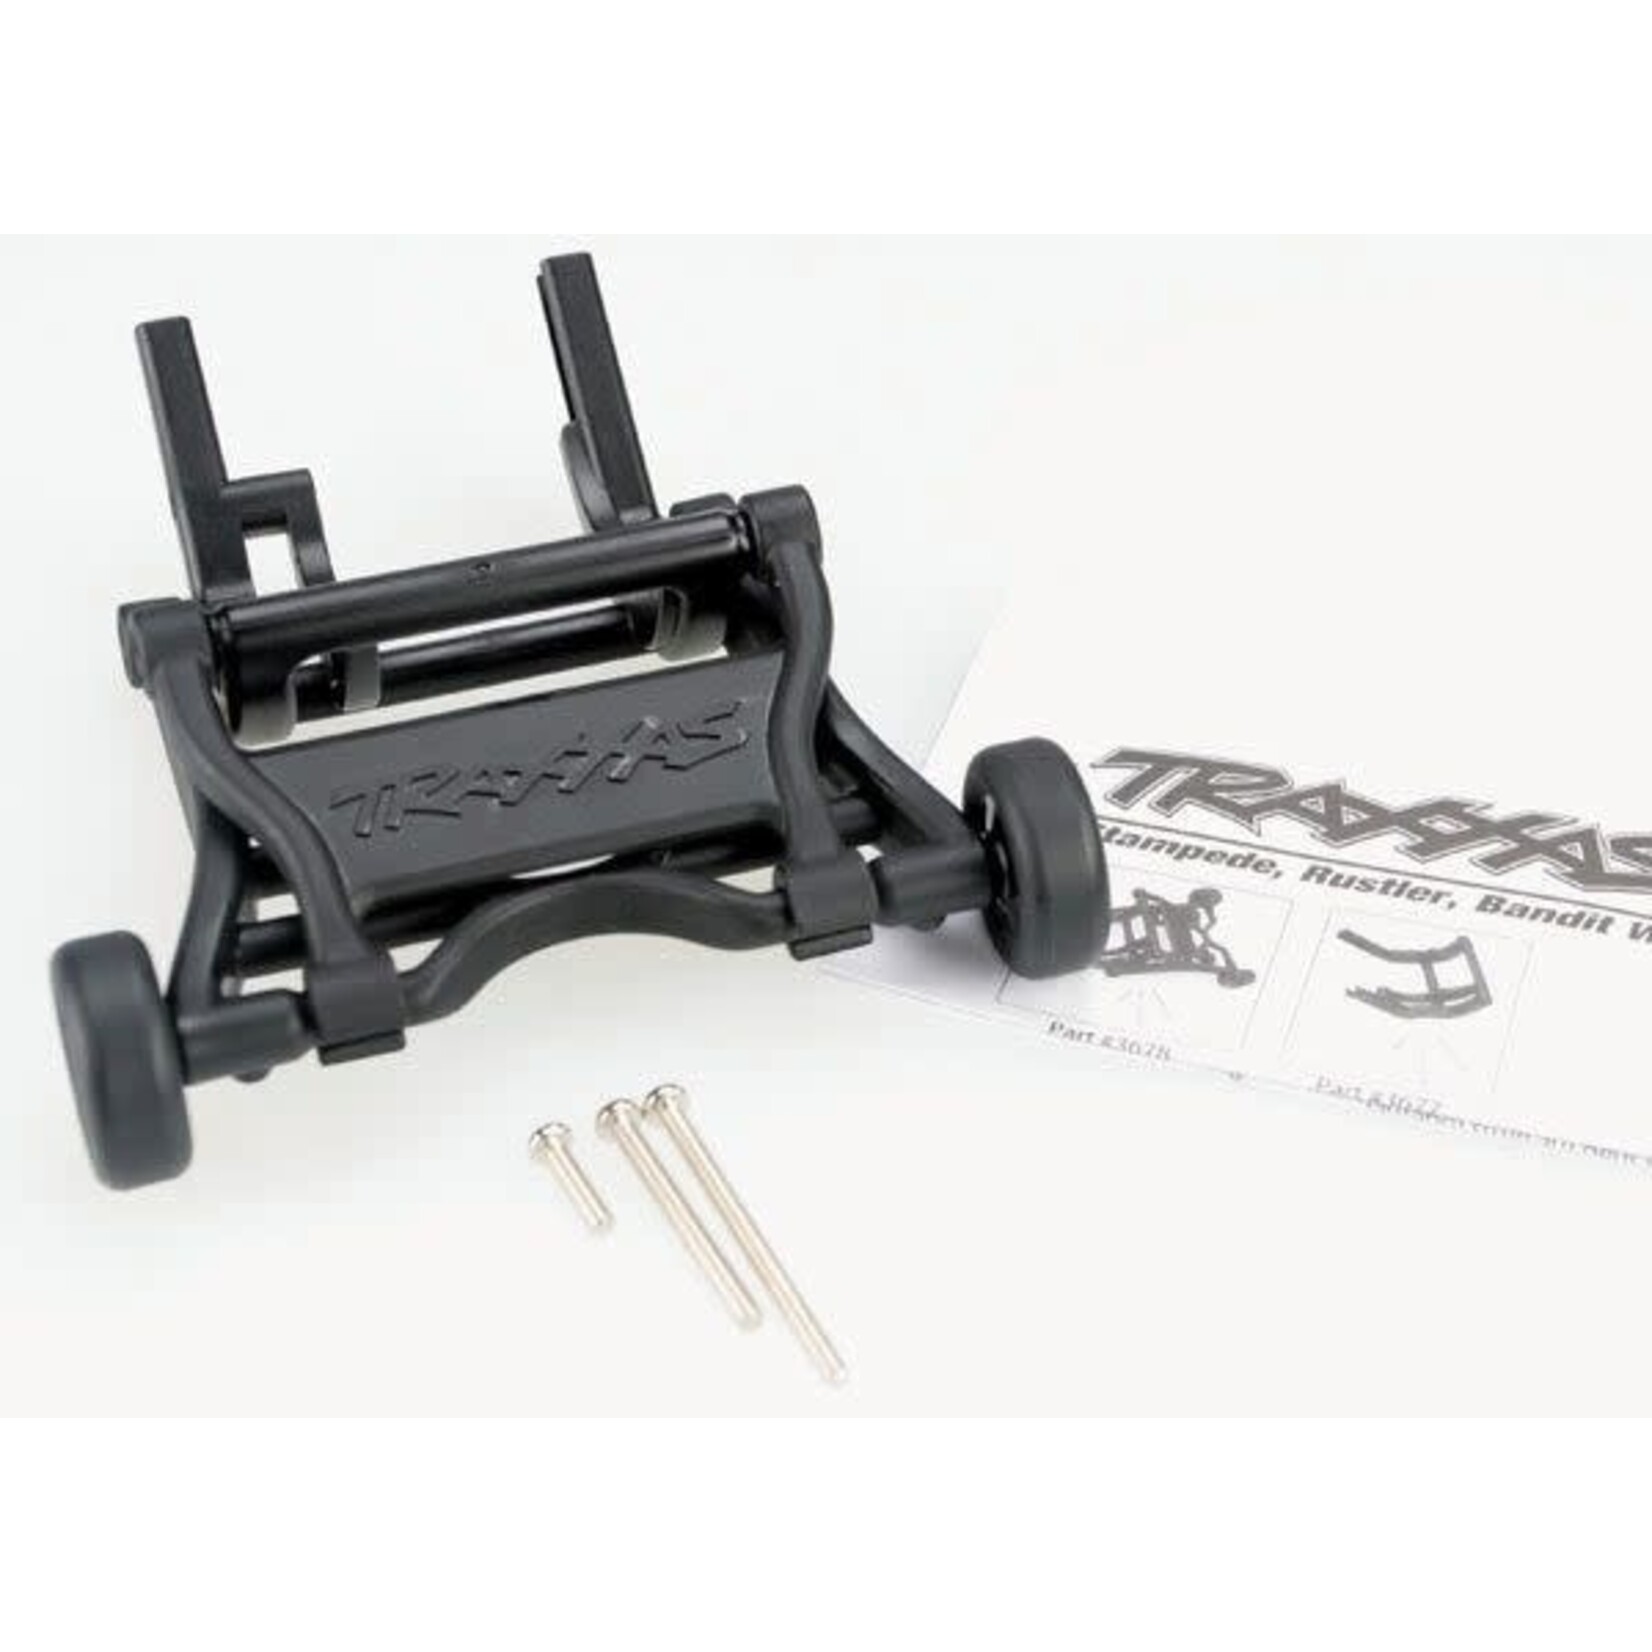 Traxxas Wheelie bar, assembled (black) (fits Slash, Bandit, Rustler®, Stampede® series)